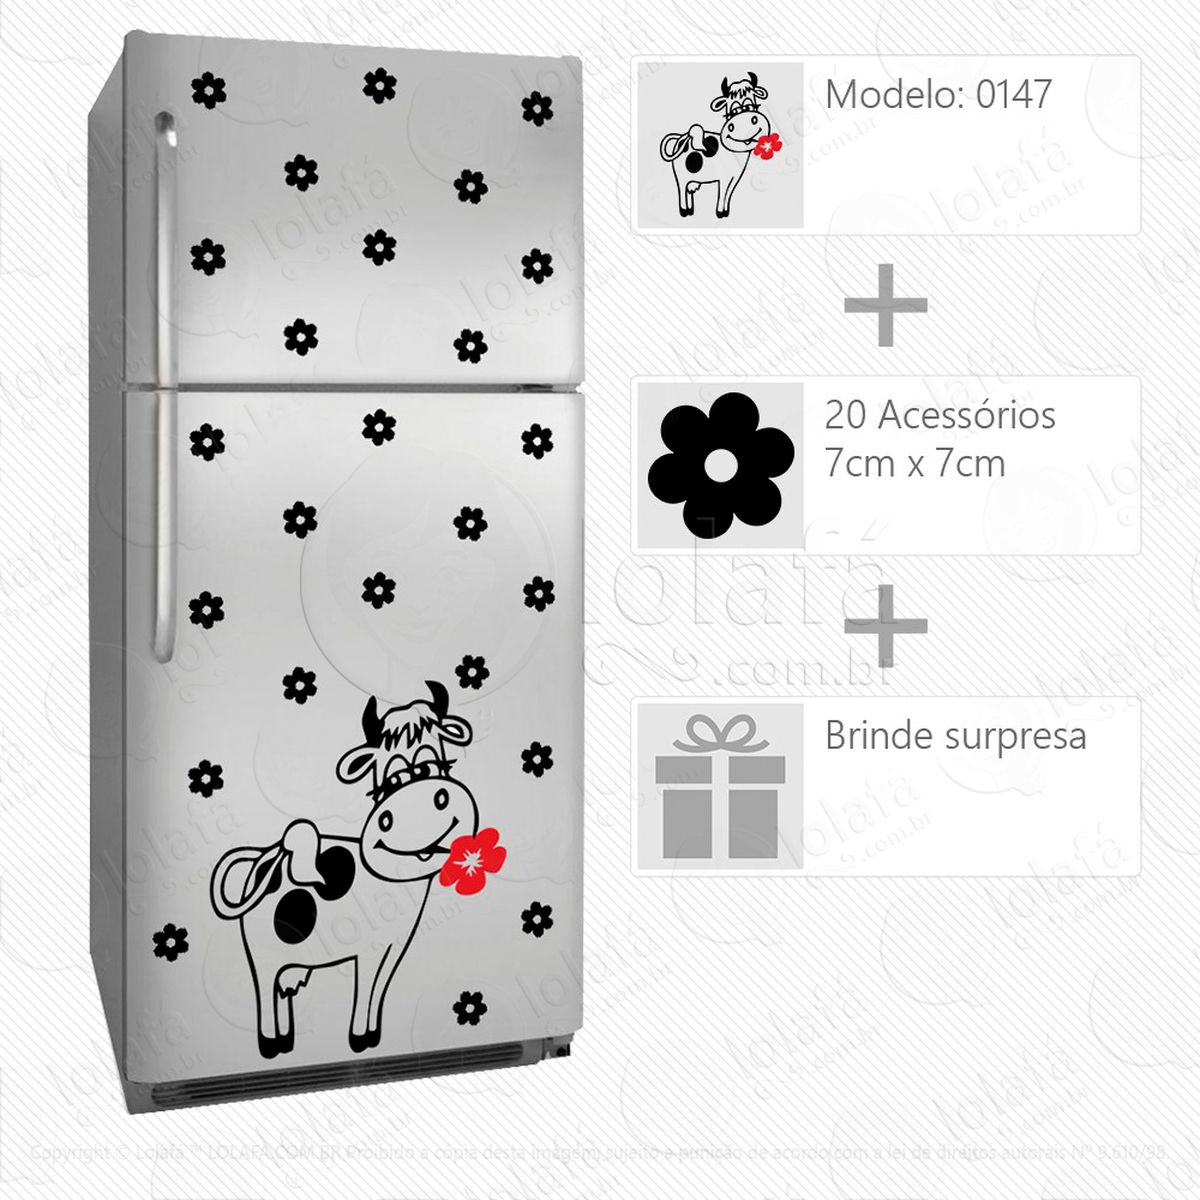 vaca adesivo para geladeira e frigobar - mod:147